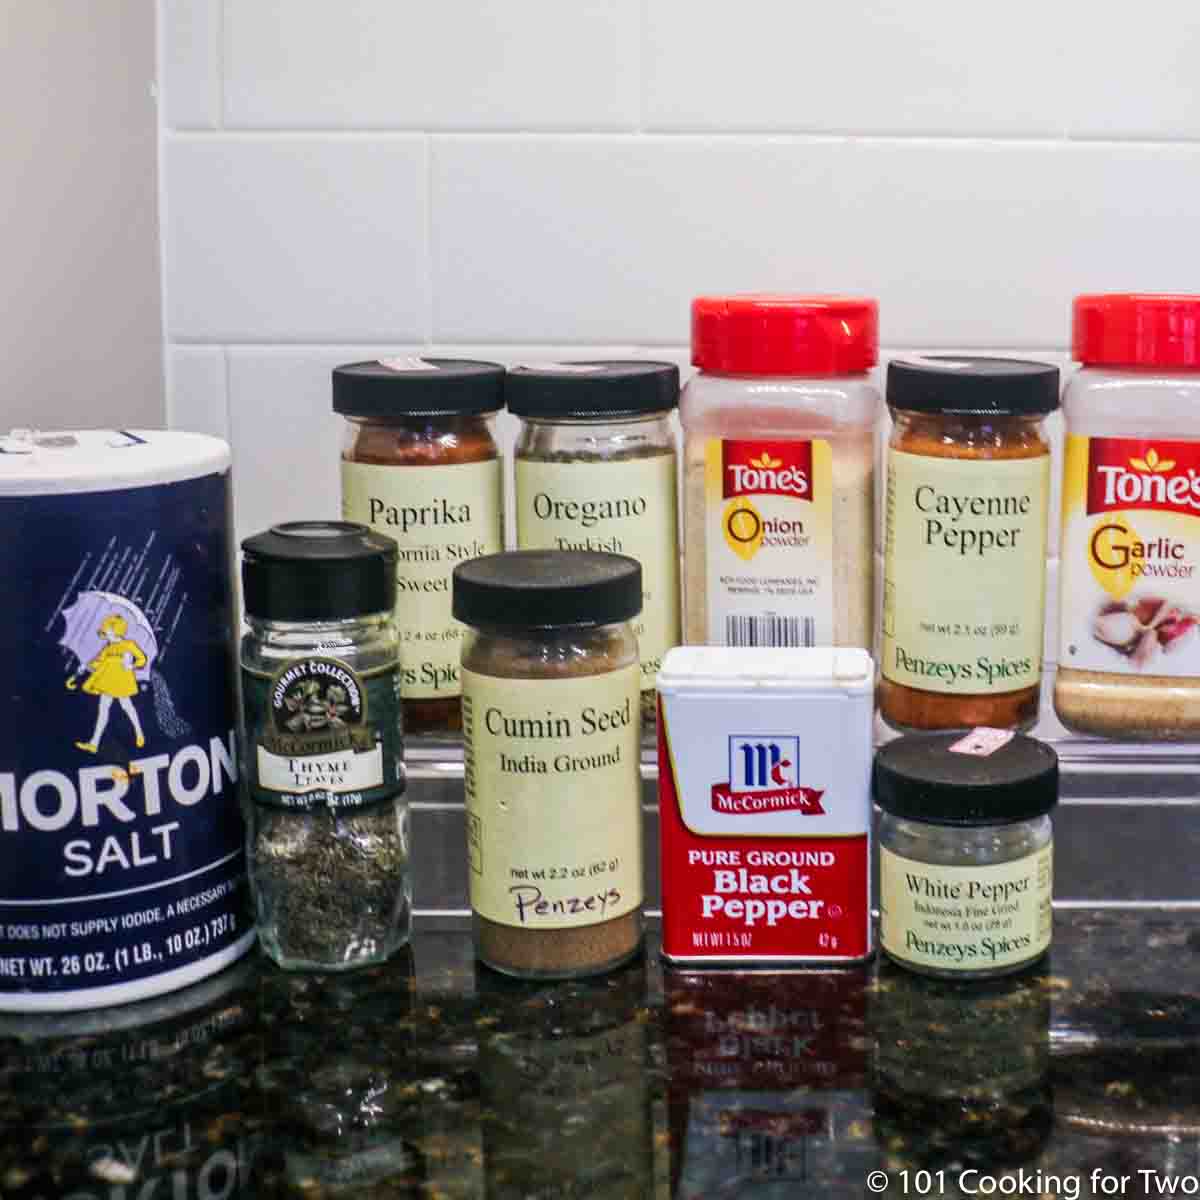 Homemade Lite Salt/Salt Substitute Recipe (Morton Copycat) ~ Salt